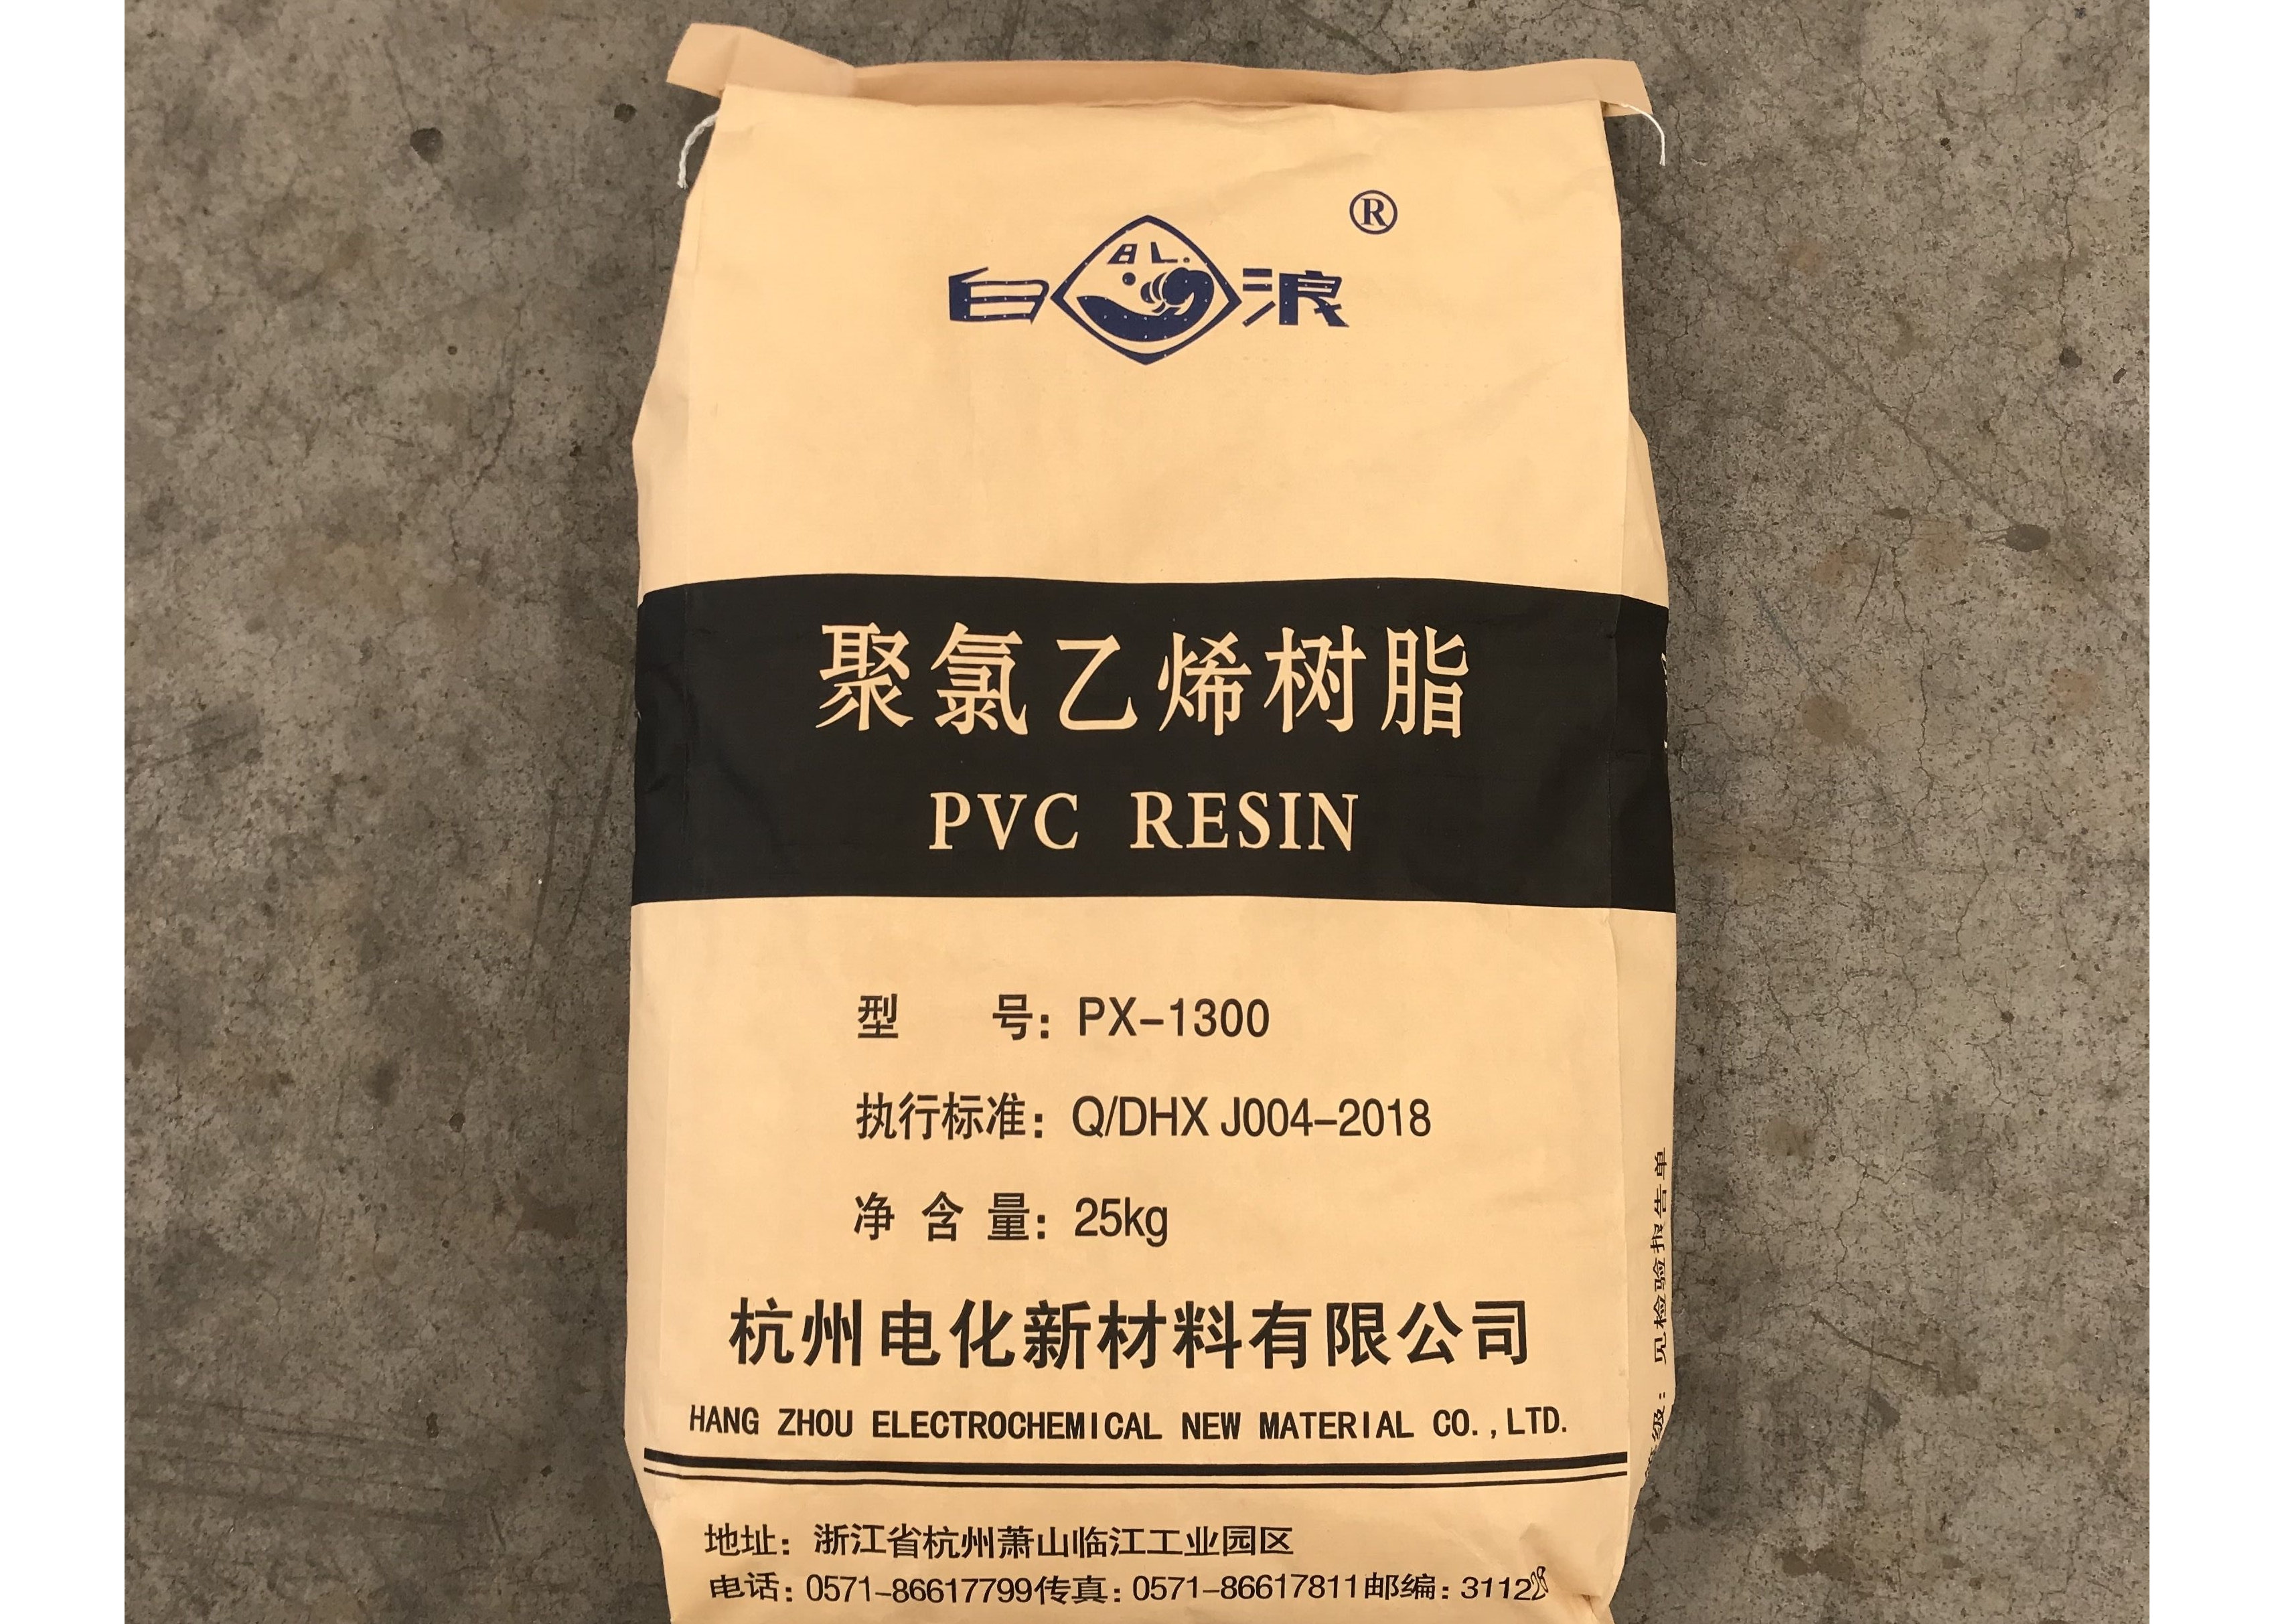 Special PVC resin SliderImage